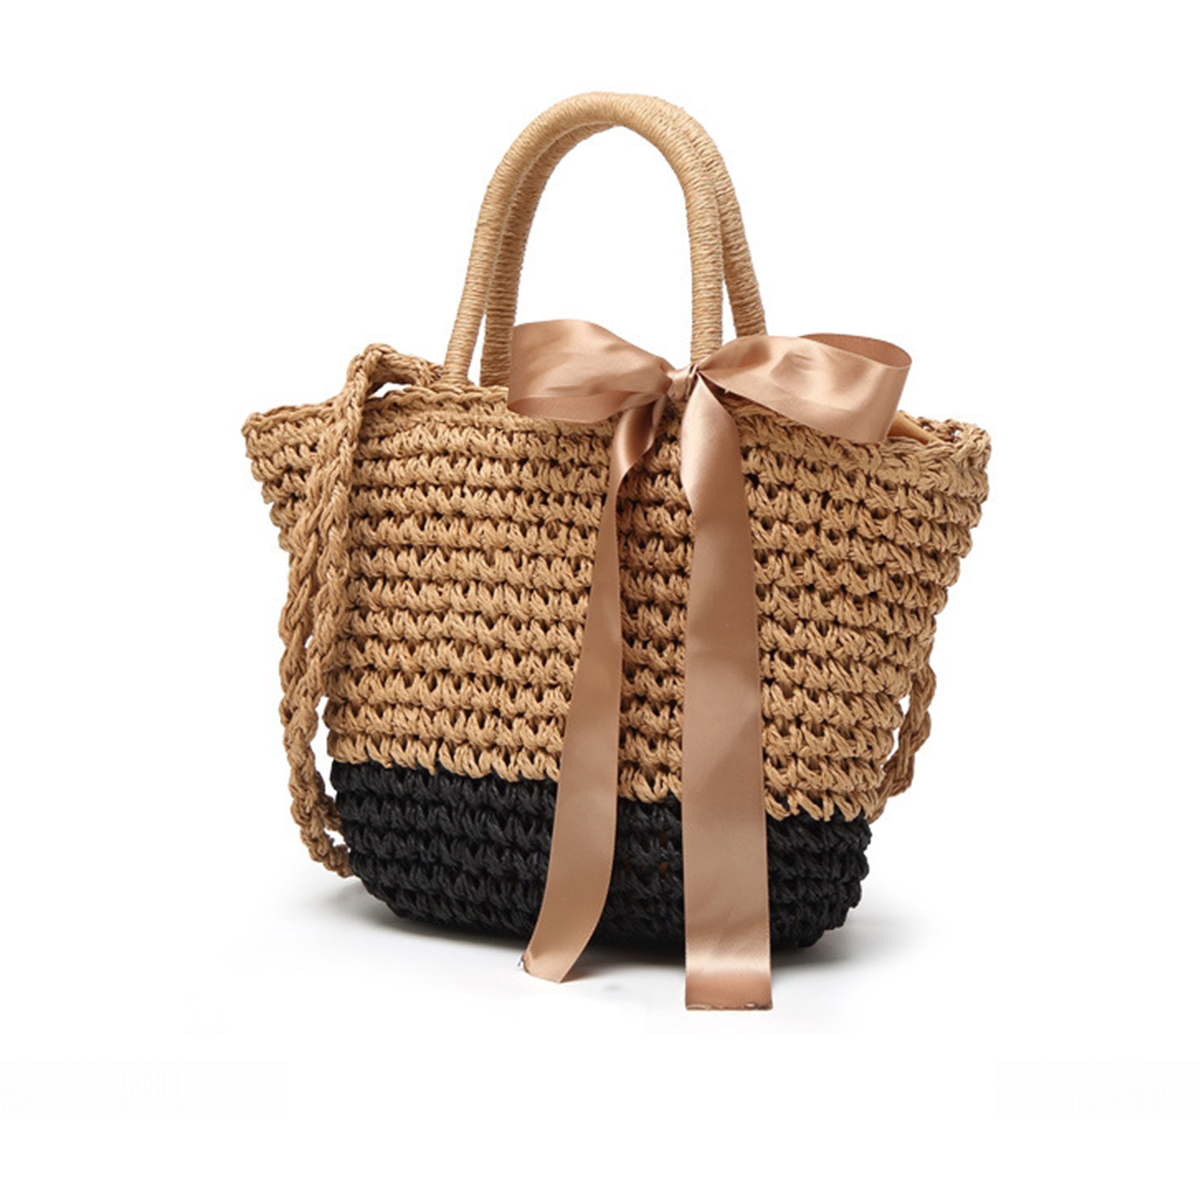 JOSEKO Straw Top Handle Handbag Summer Beach Purse Ladies Shoulder Bag Net